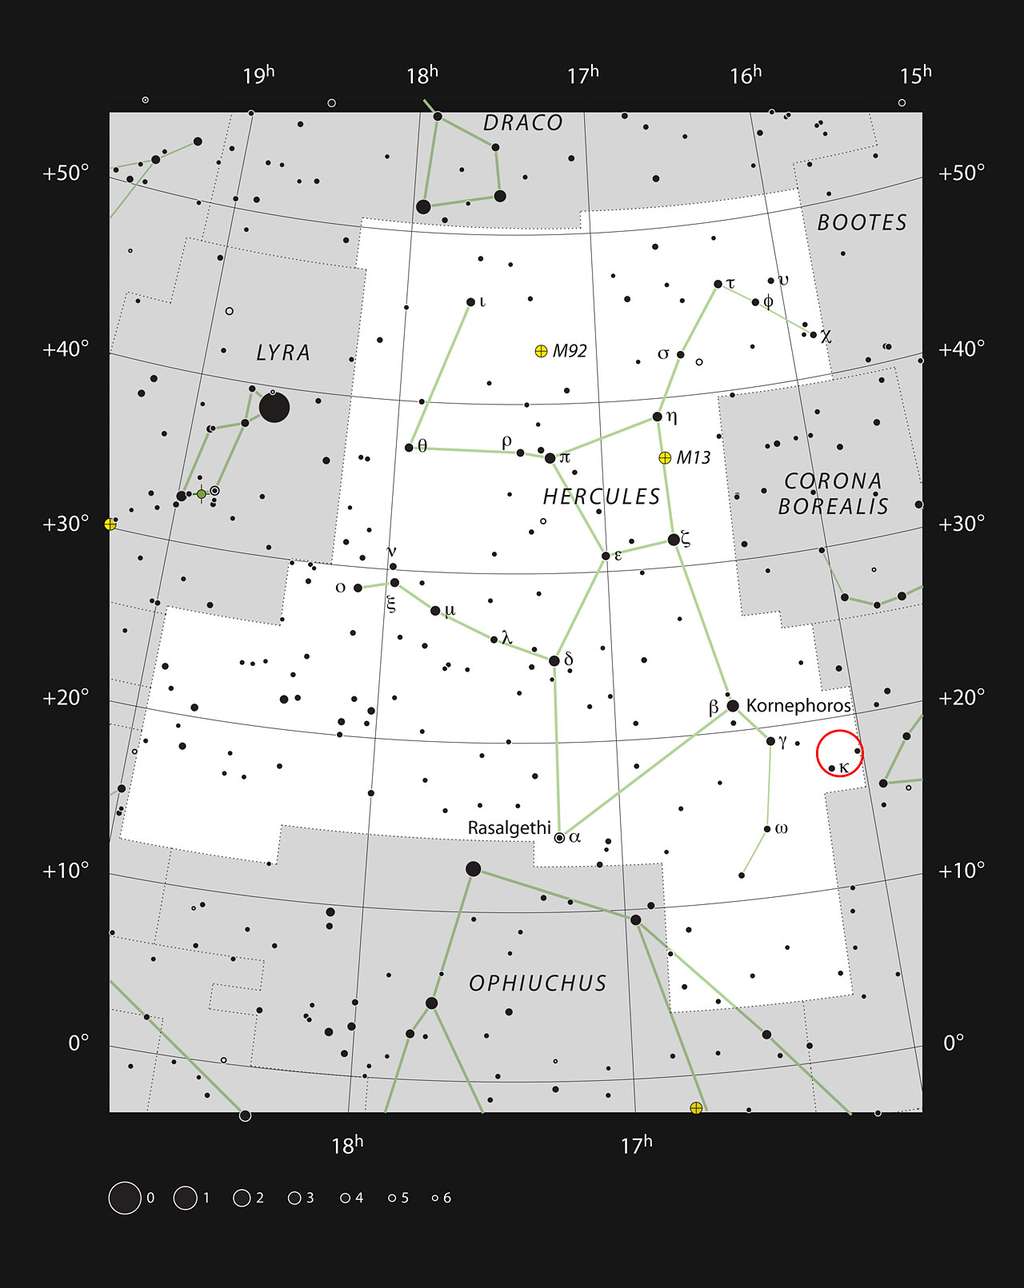 Le jeune amas de galaxies Abell 2151 se situe en bordure de la constellation d'Hercule. © ESO